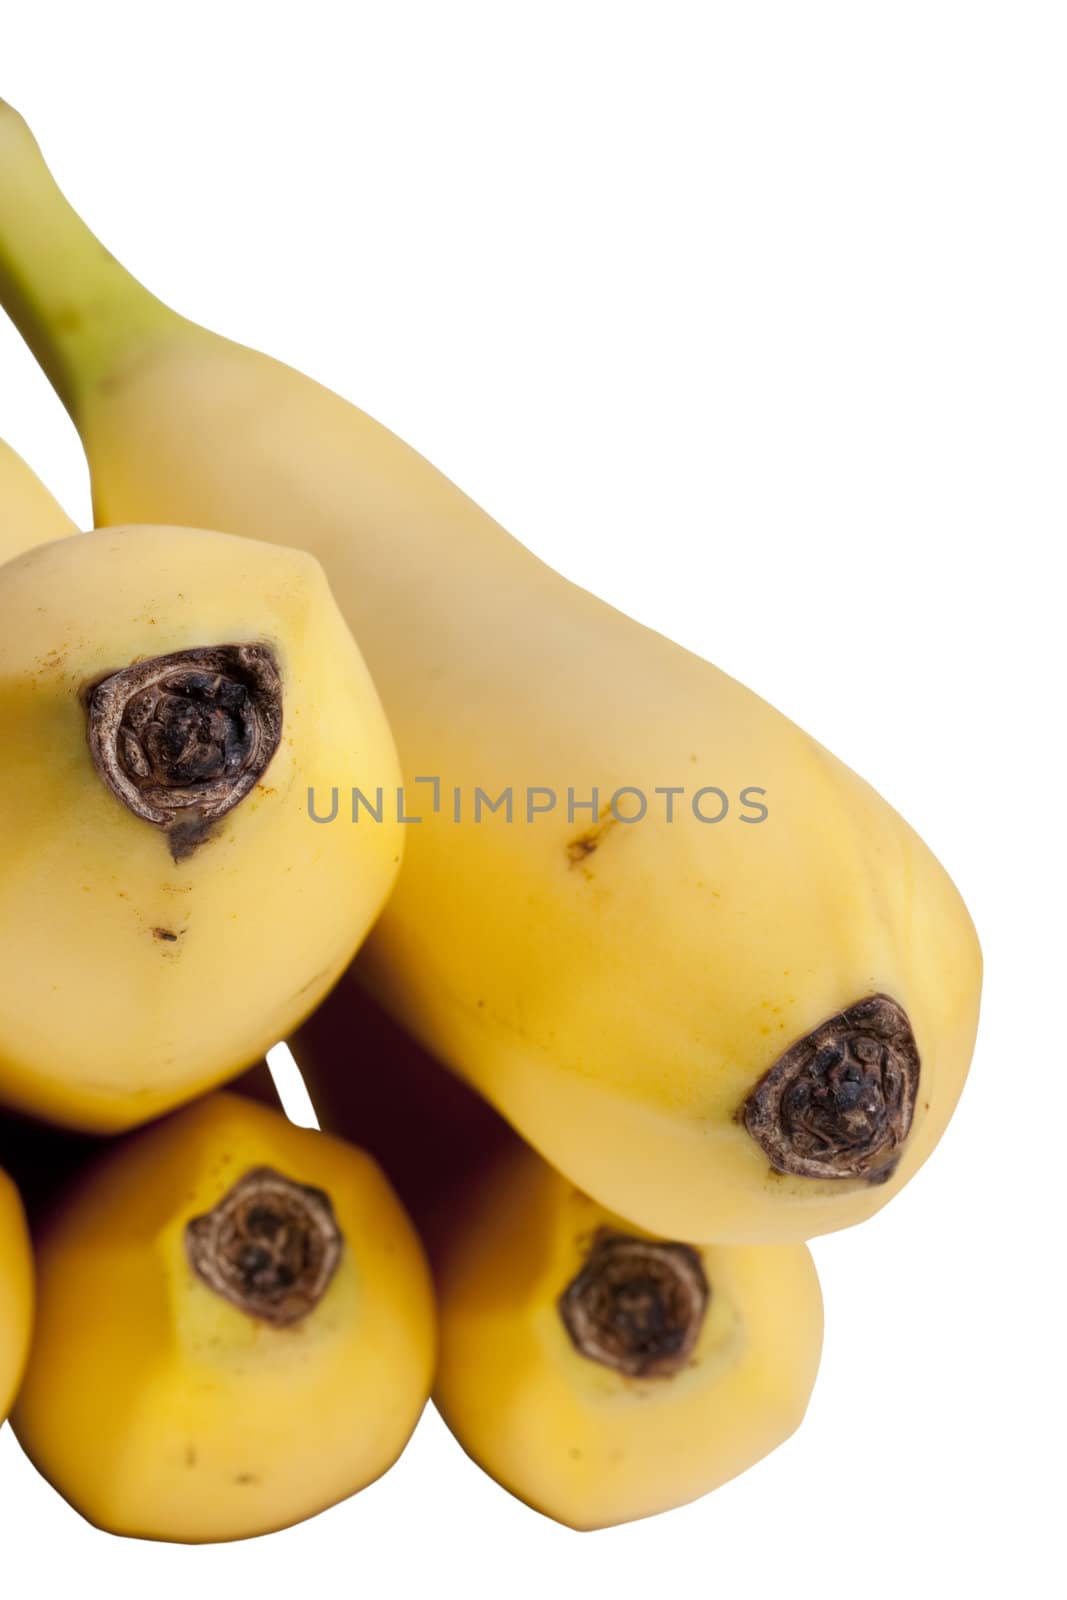 Ripe yellow bananas on a white background.